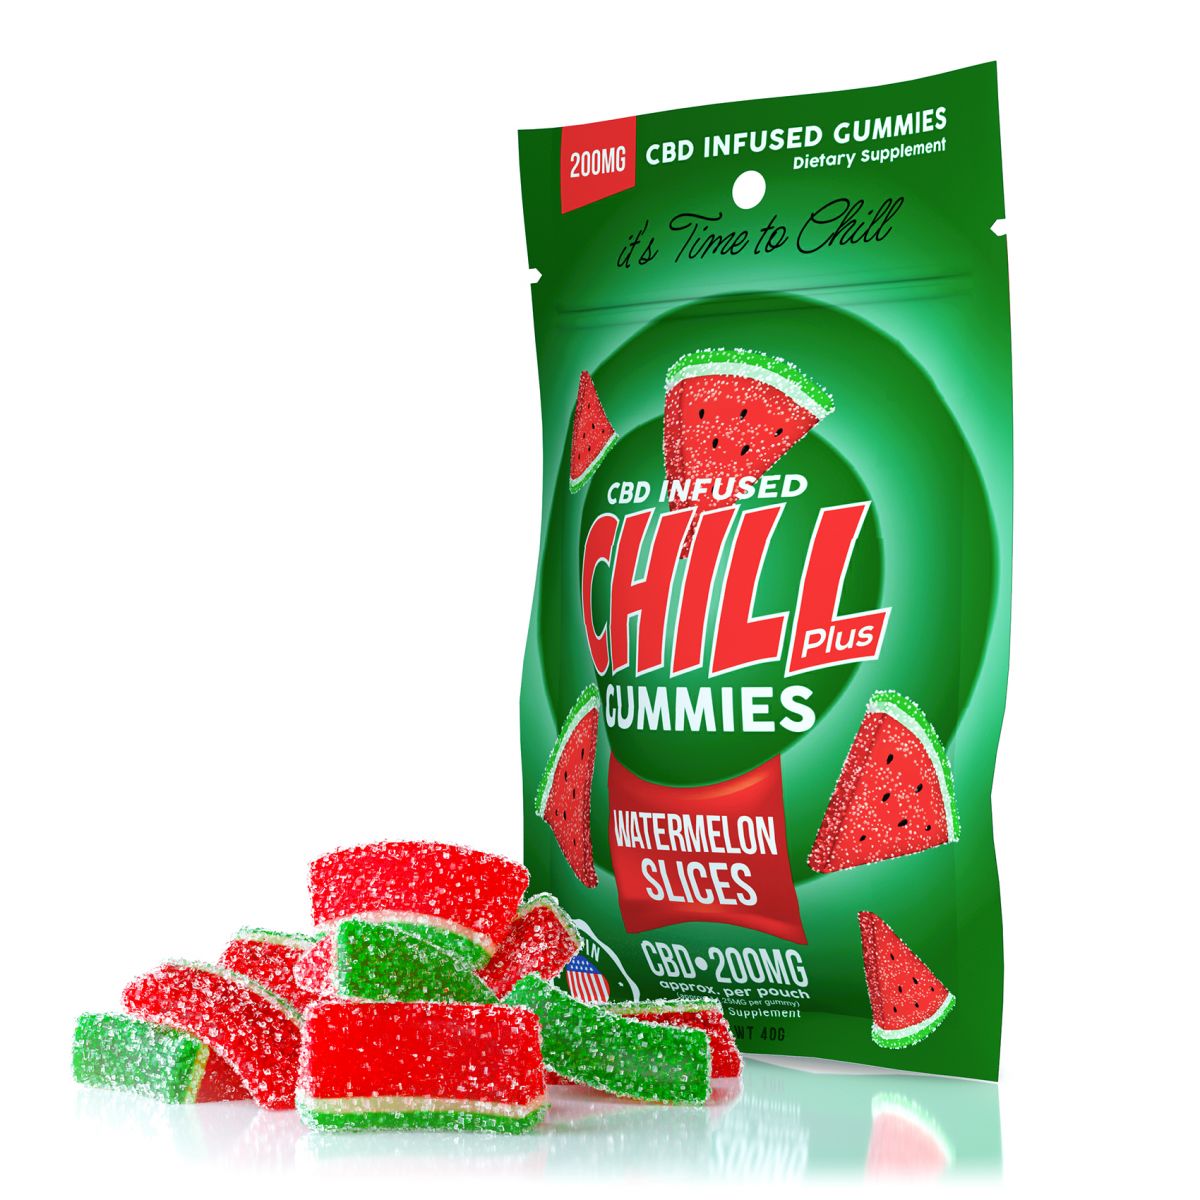 Chill Plus Gummies - CBD Infused Watermelon Slices